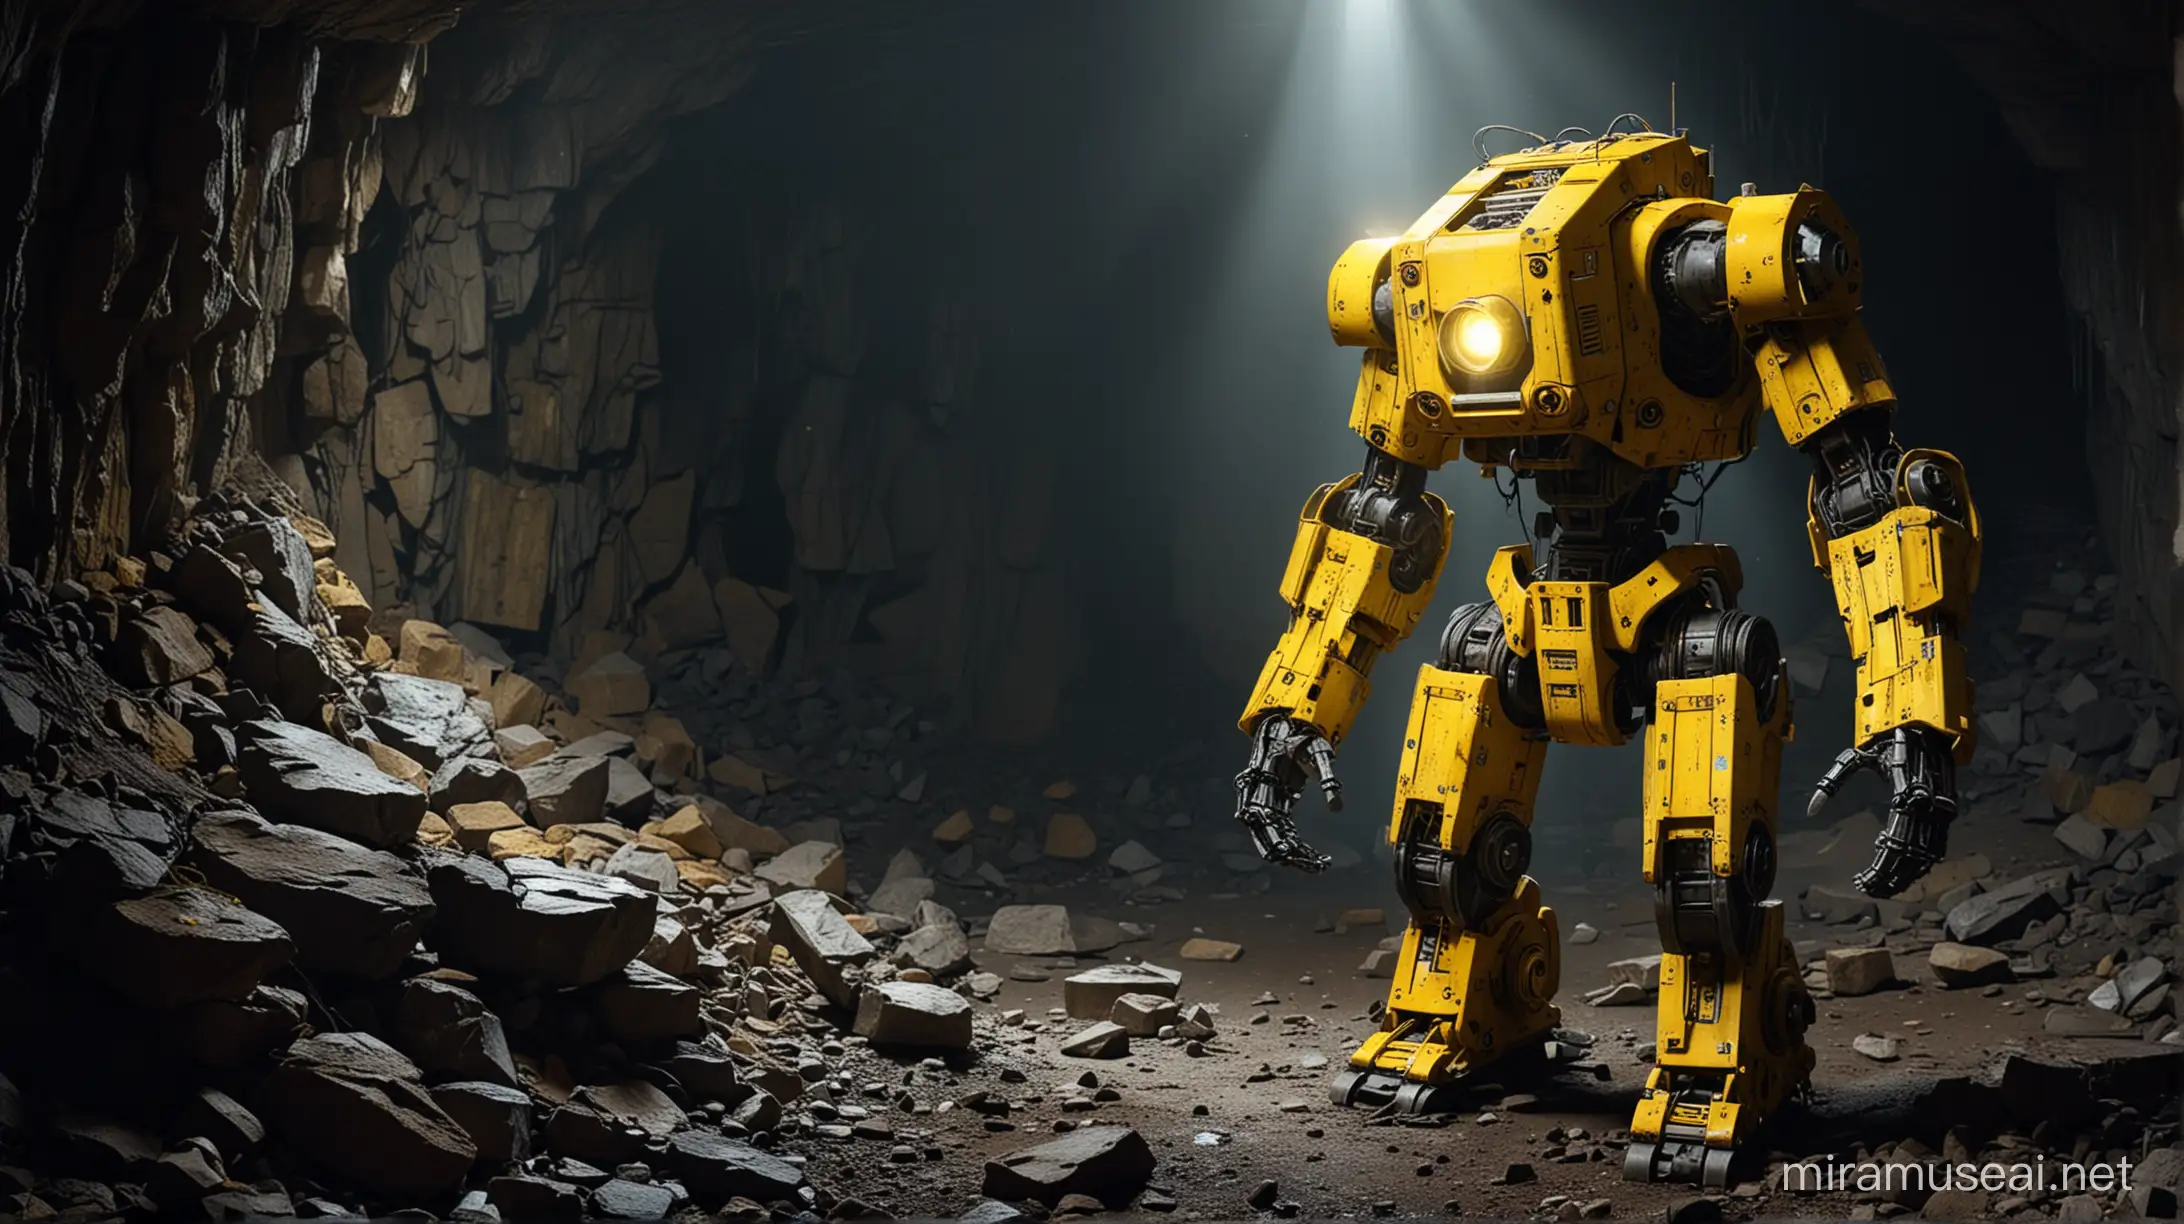 Bright Yellow Robot Exploring Abandoned Mine with Illuminating Light